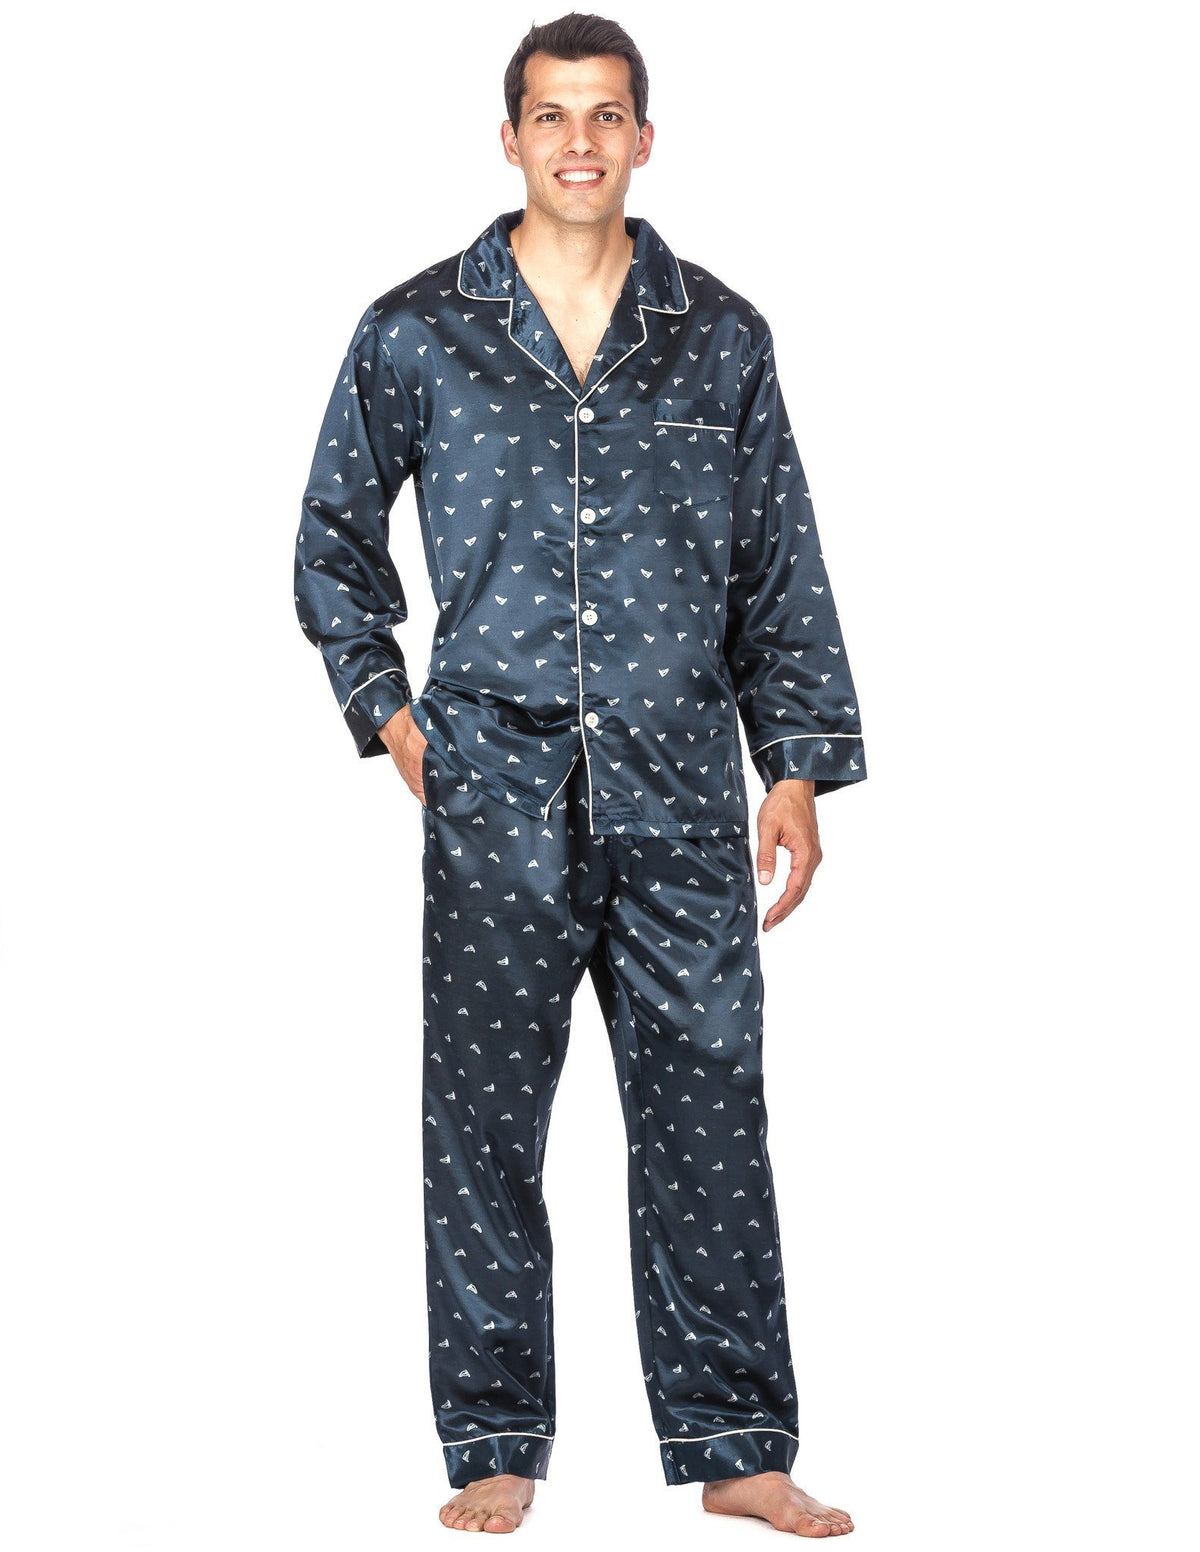 Men's Premium Satin Pajama Sleepwear Set - Navy Boat